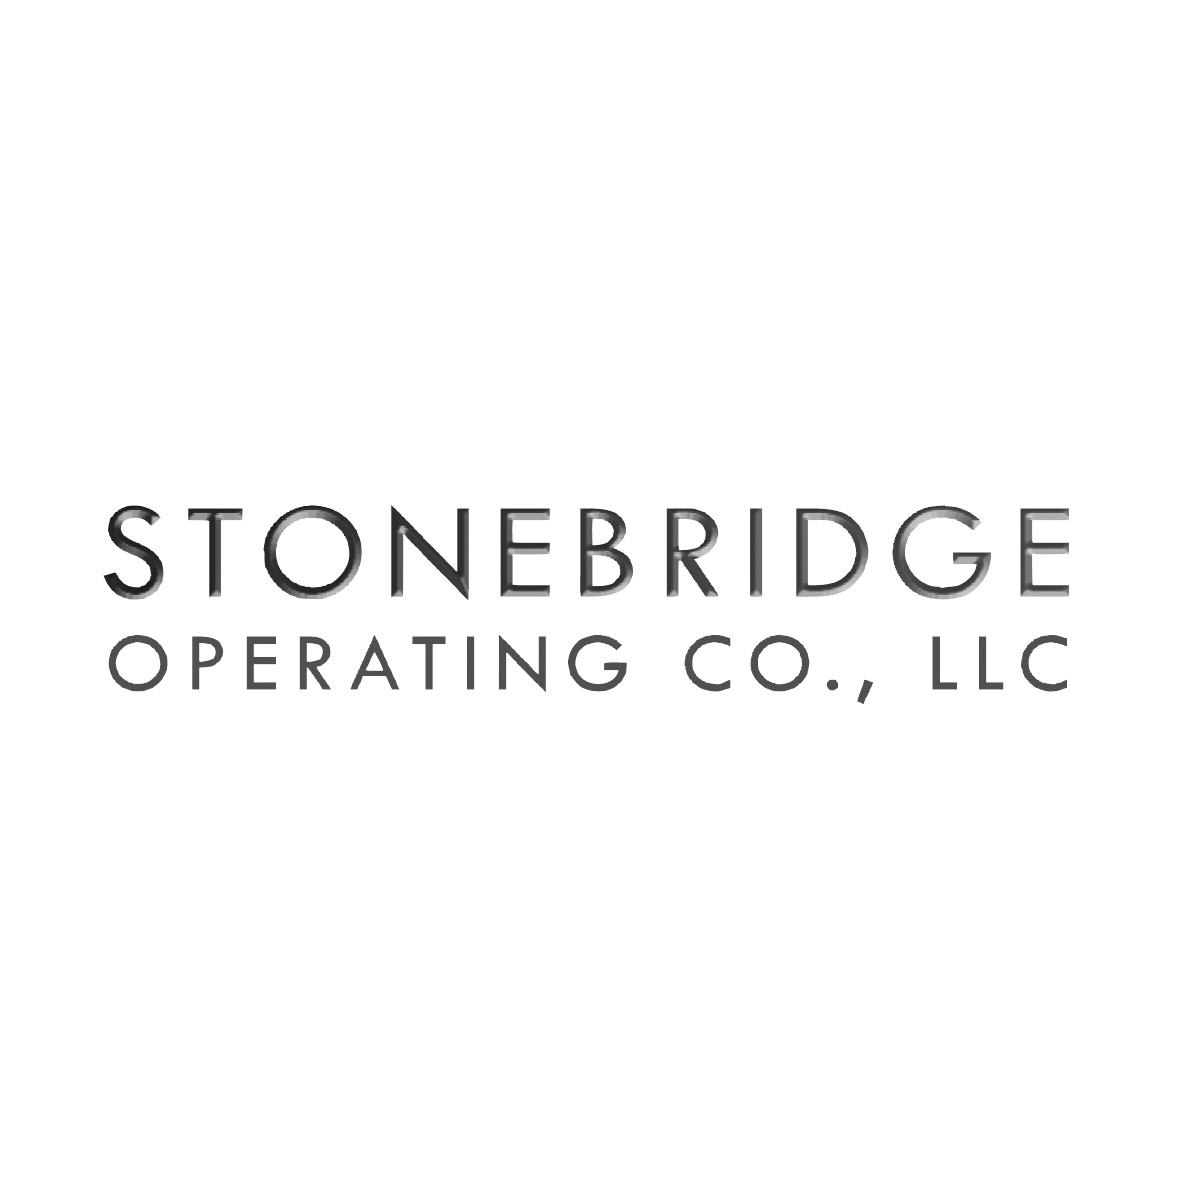 Stonebridge Operating Co., LLC